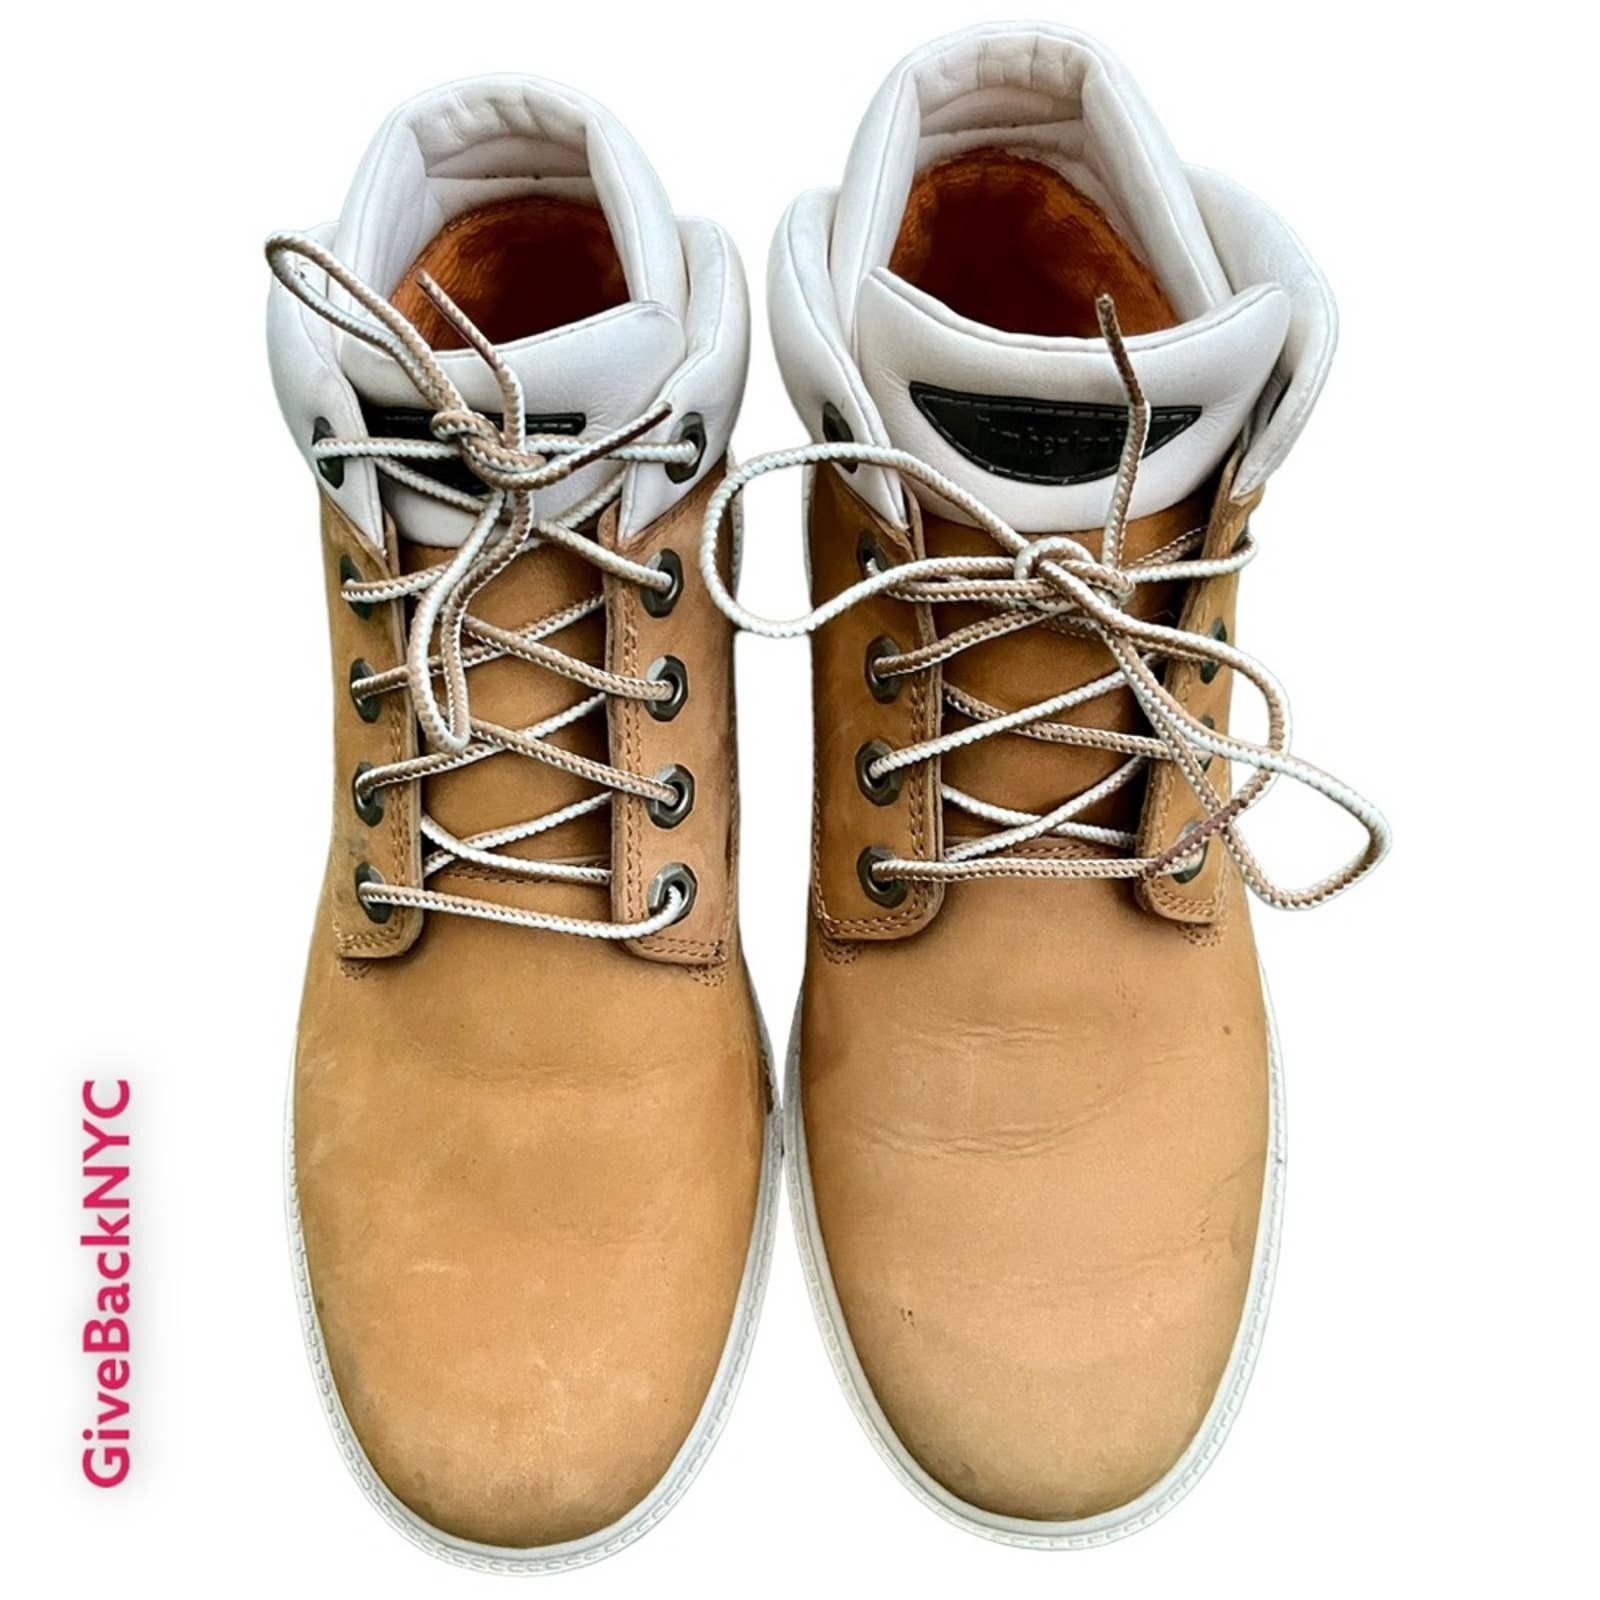 Timberland Timberland 5-Eye Leather Chukka Boot in Tan Size 7 Size US 8 / IT 38 - 5 Thumbnail